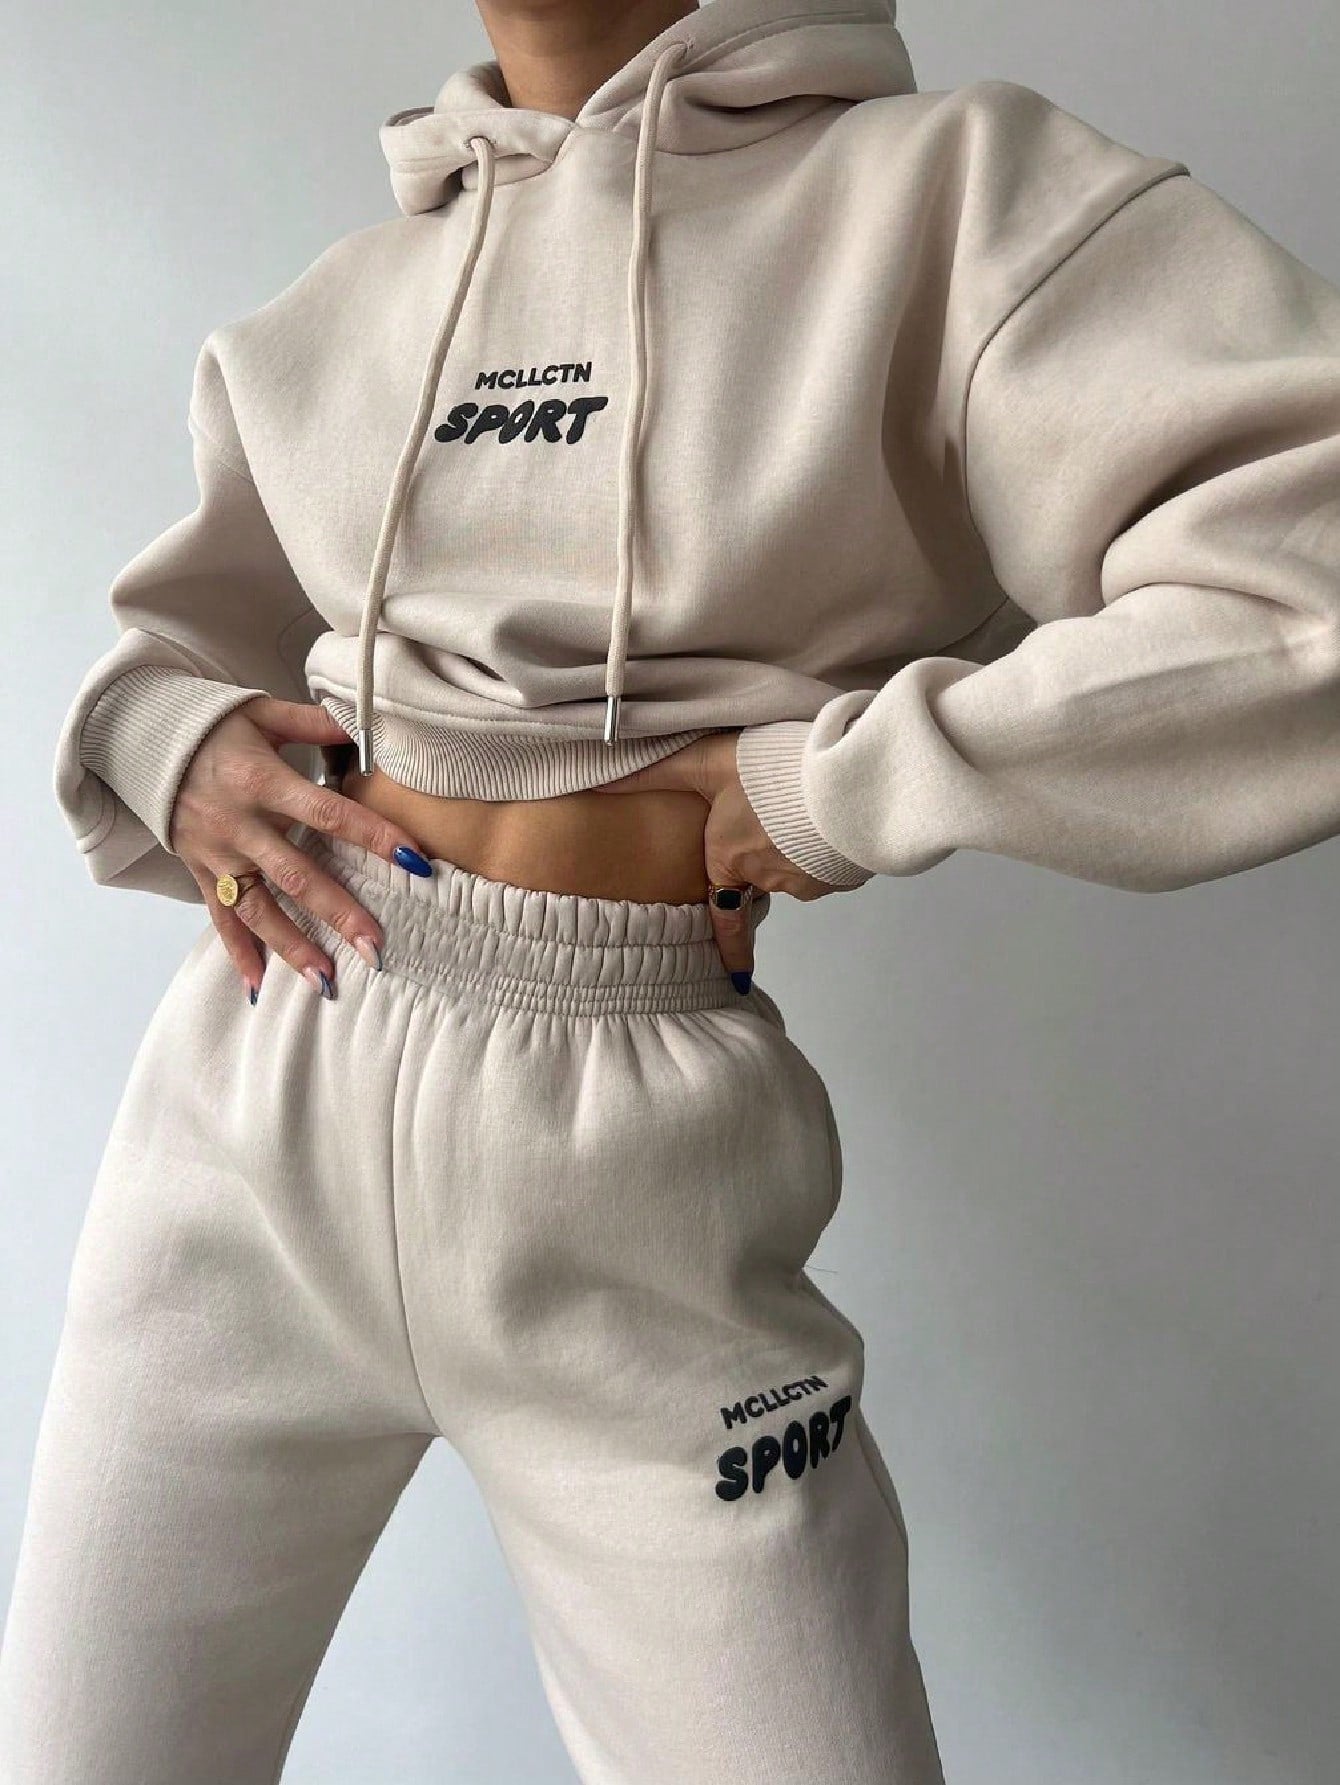 Women's Loose Casual Sweatshirt And Sweatpants Two Piece Set